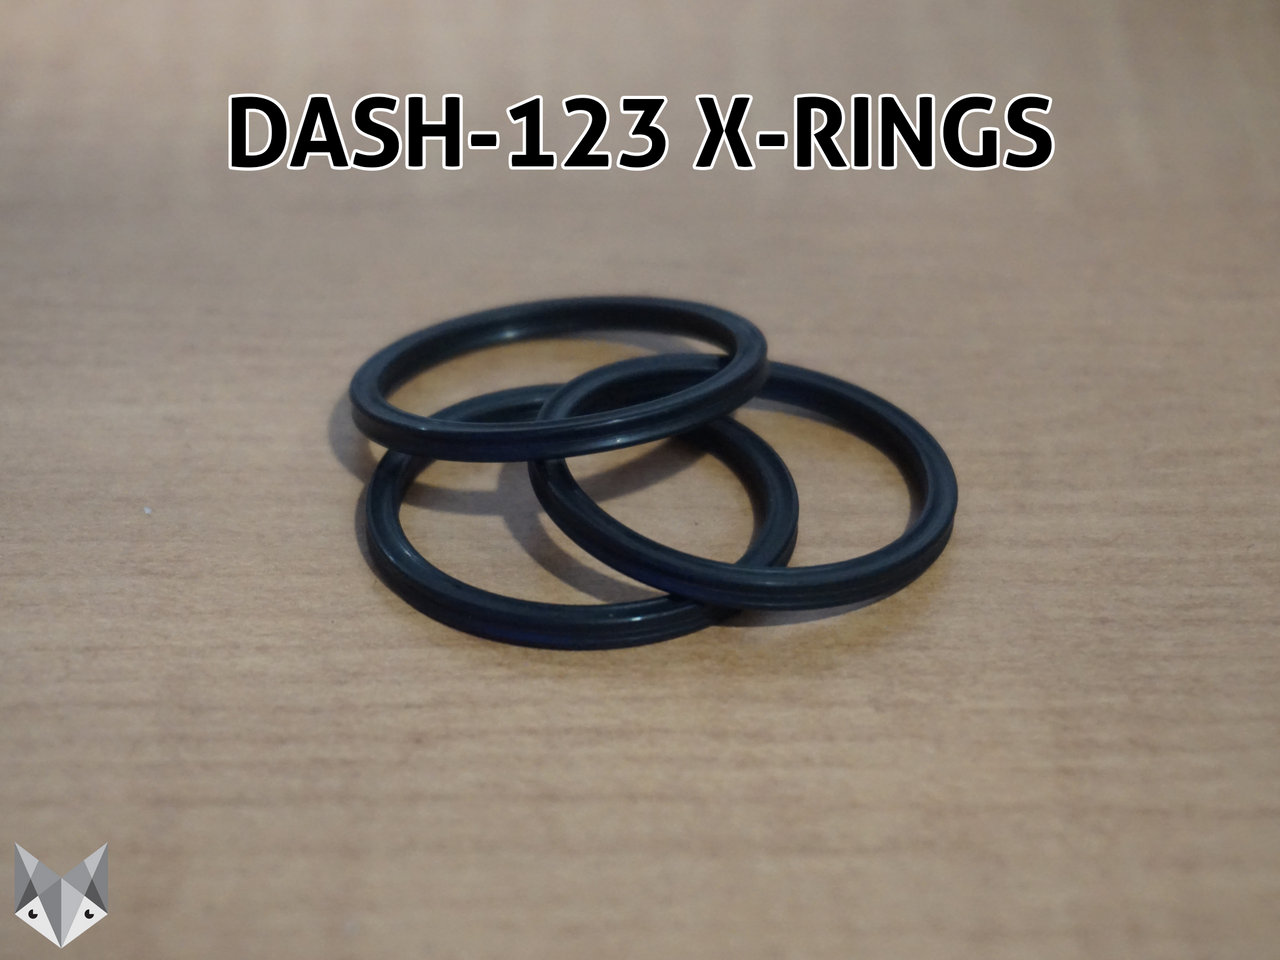 Dash-123 X-Rings